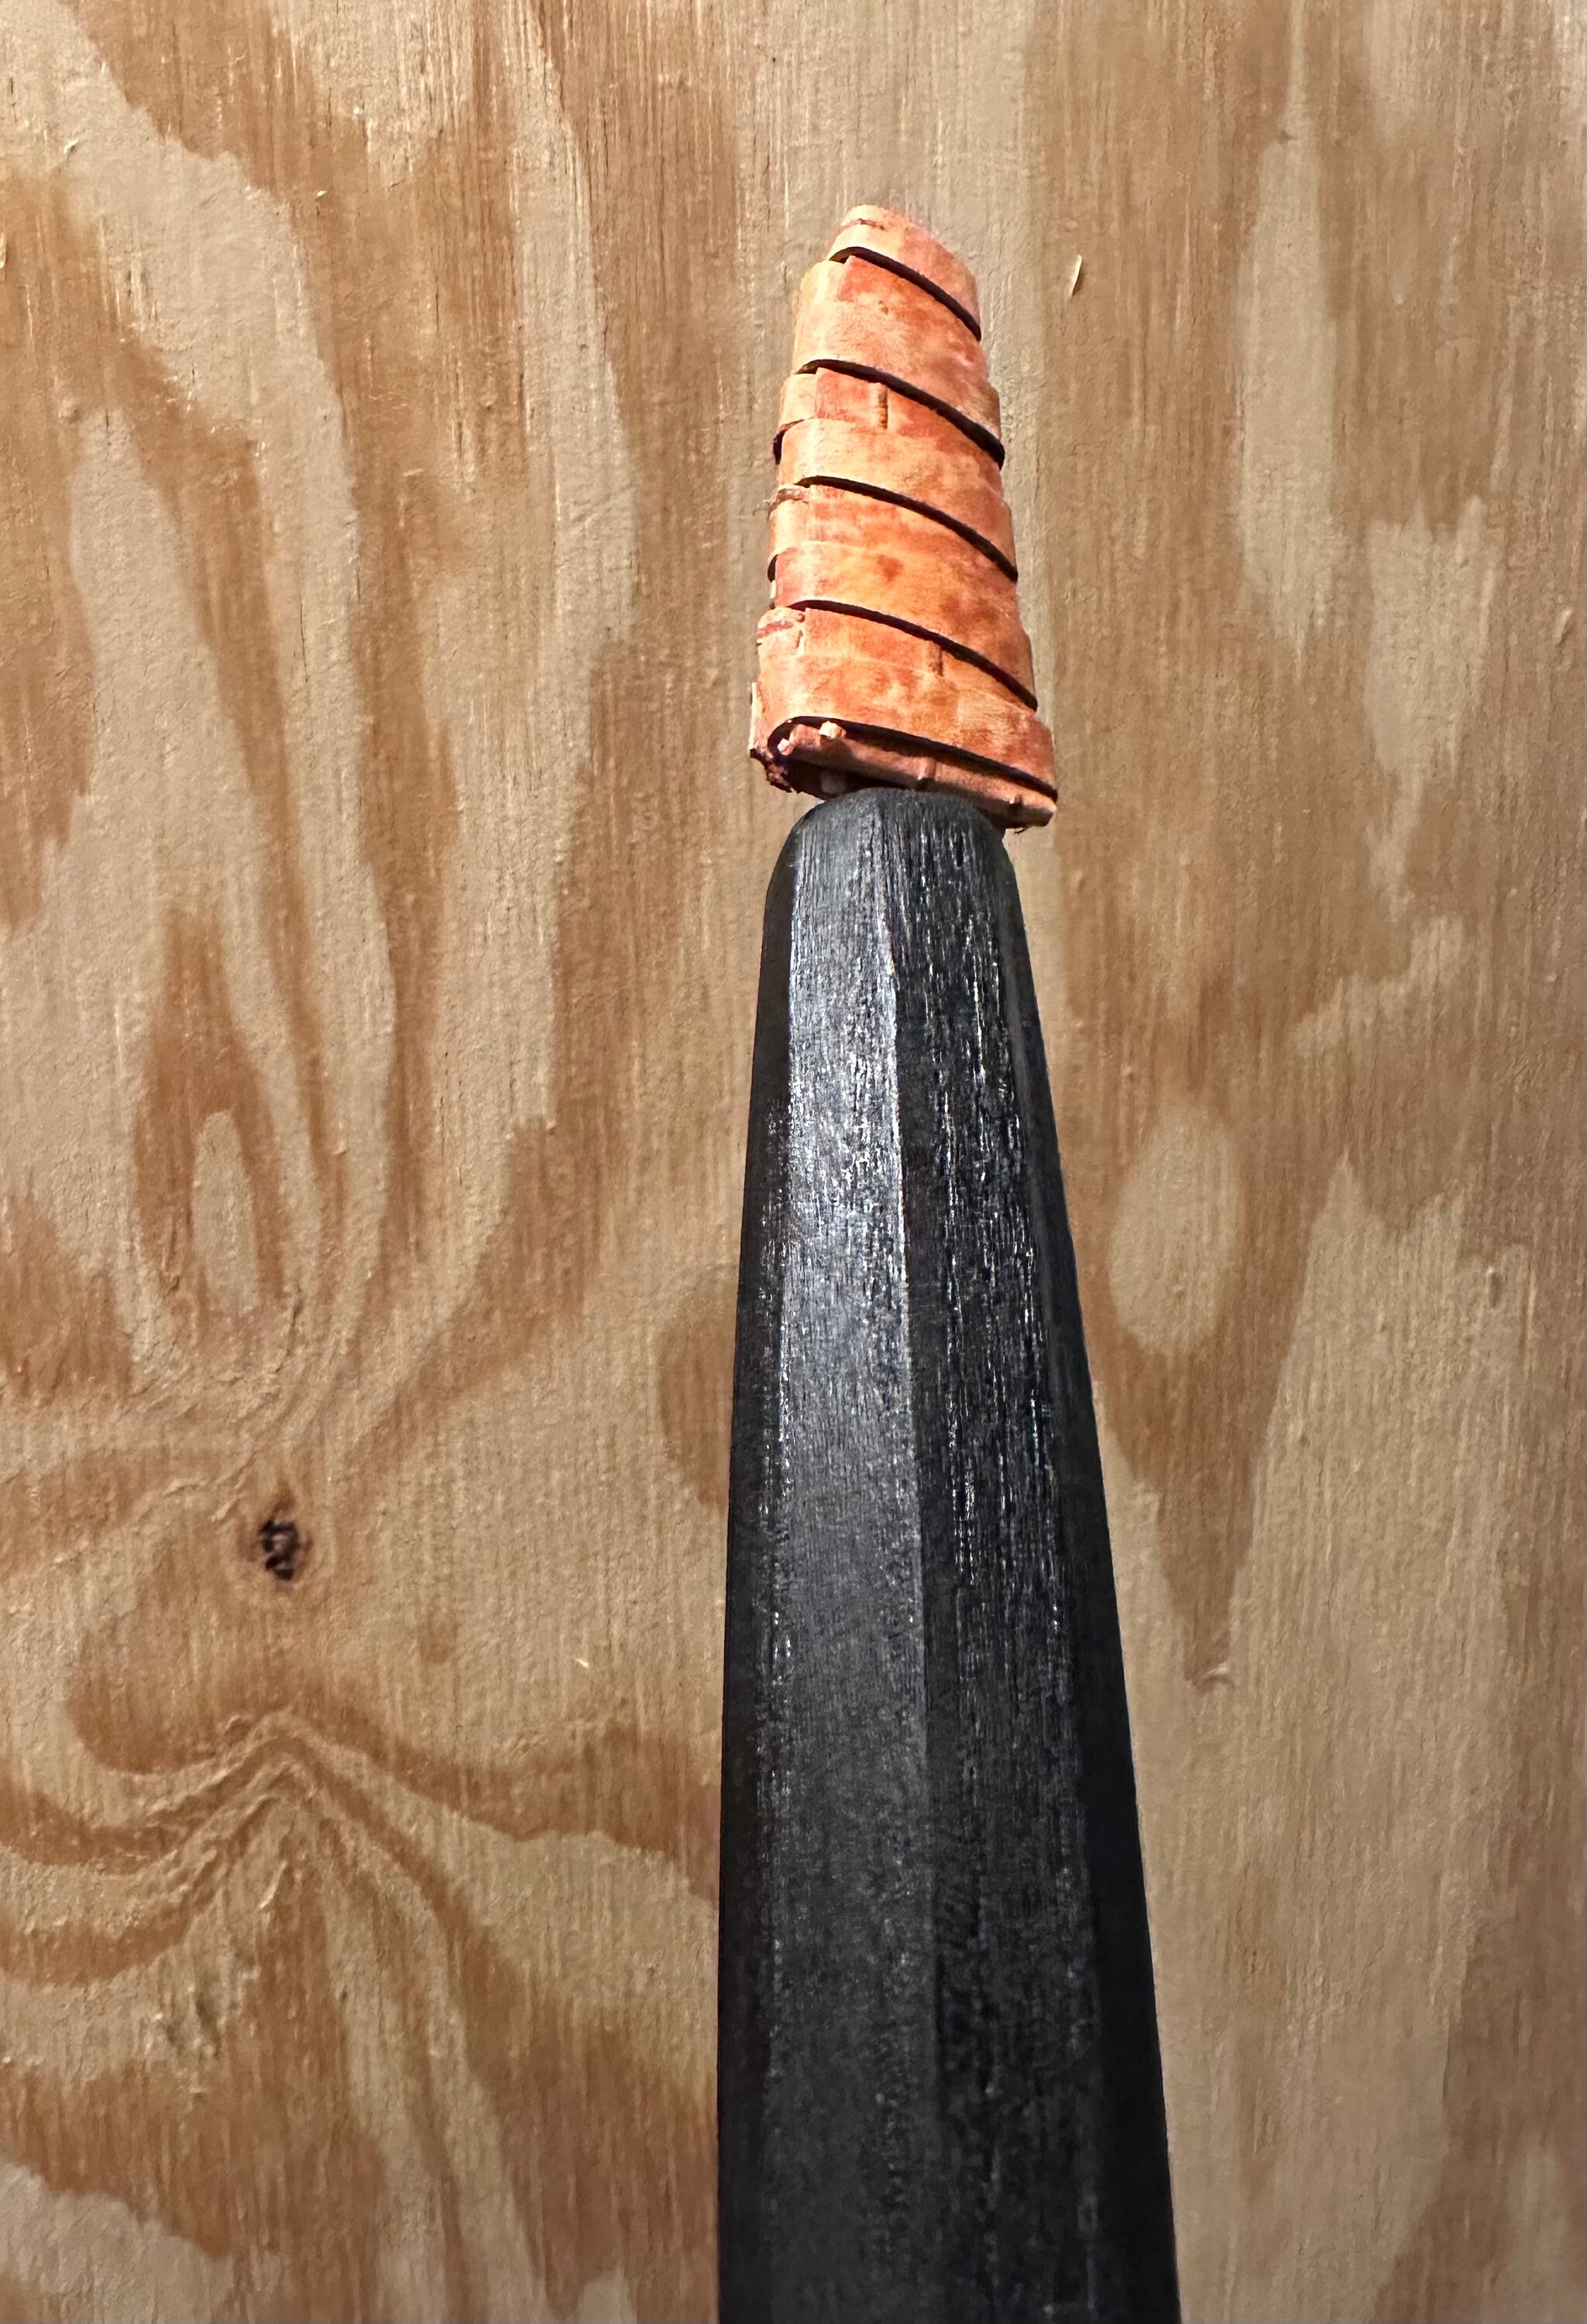 Pinewood Forge 2-1/4” sloyd knife